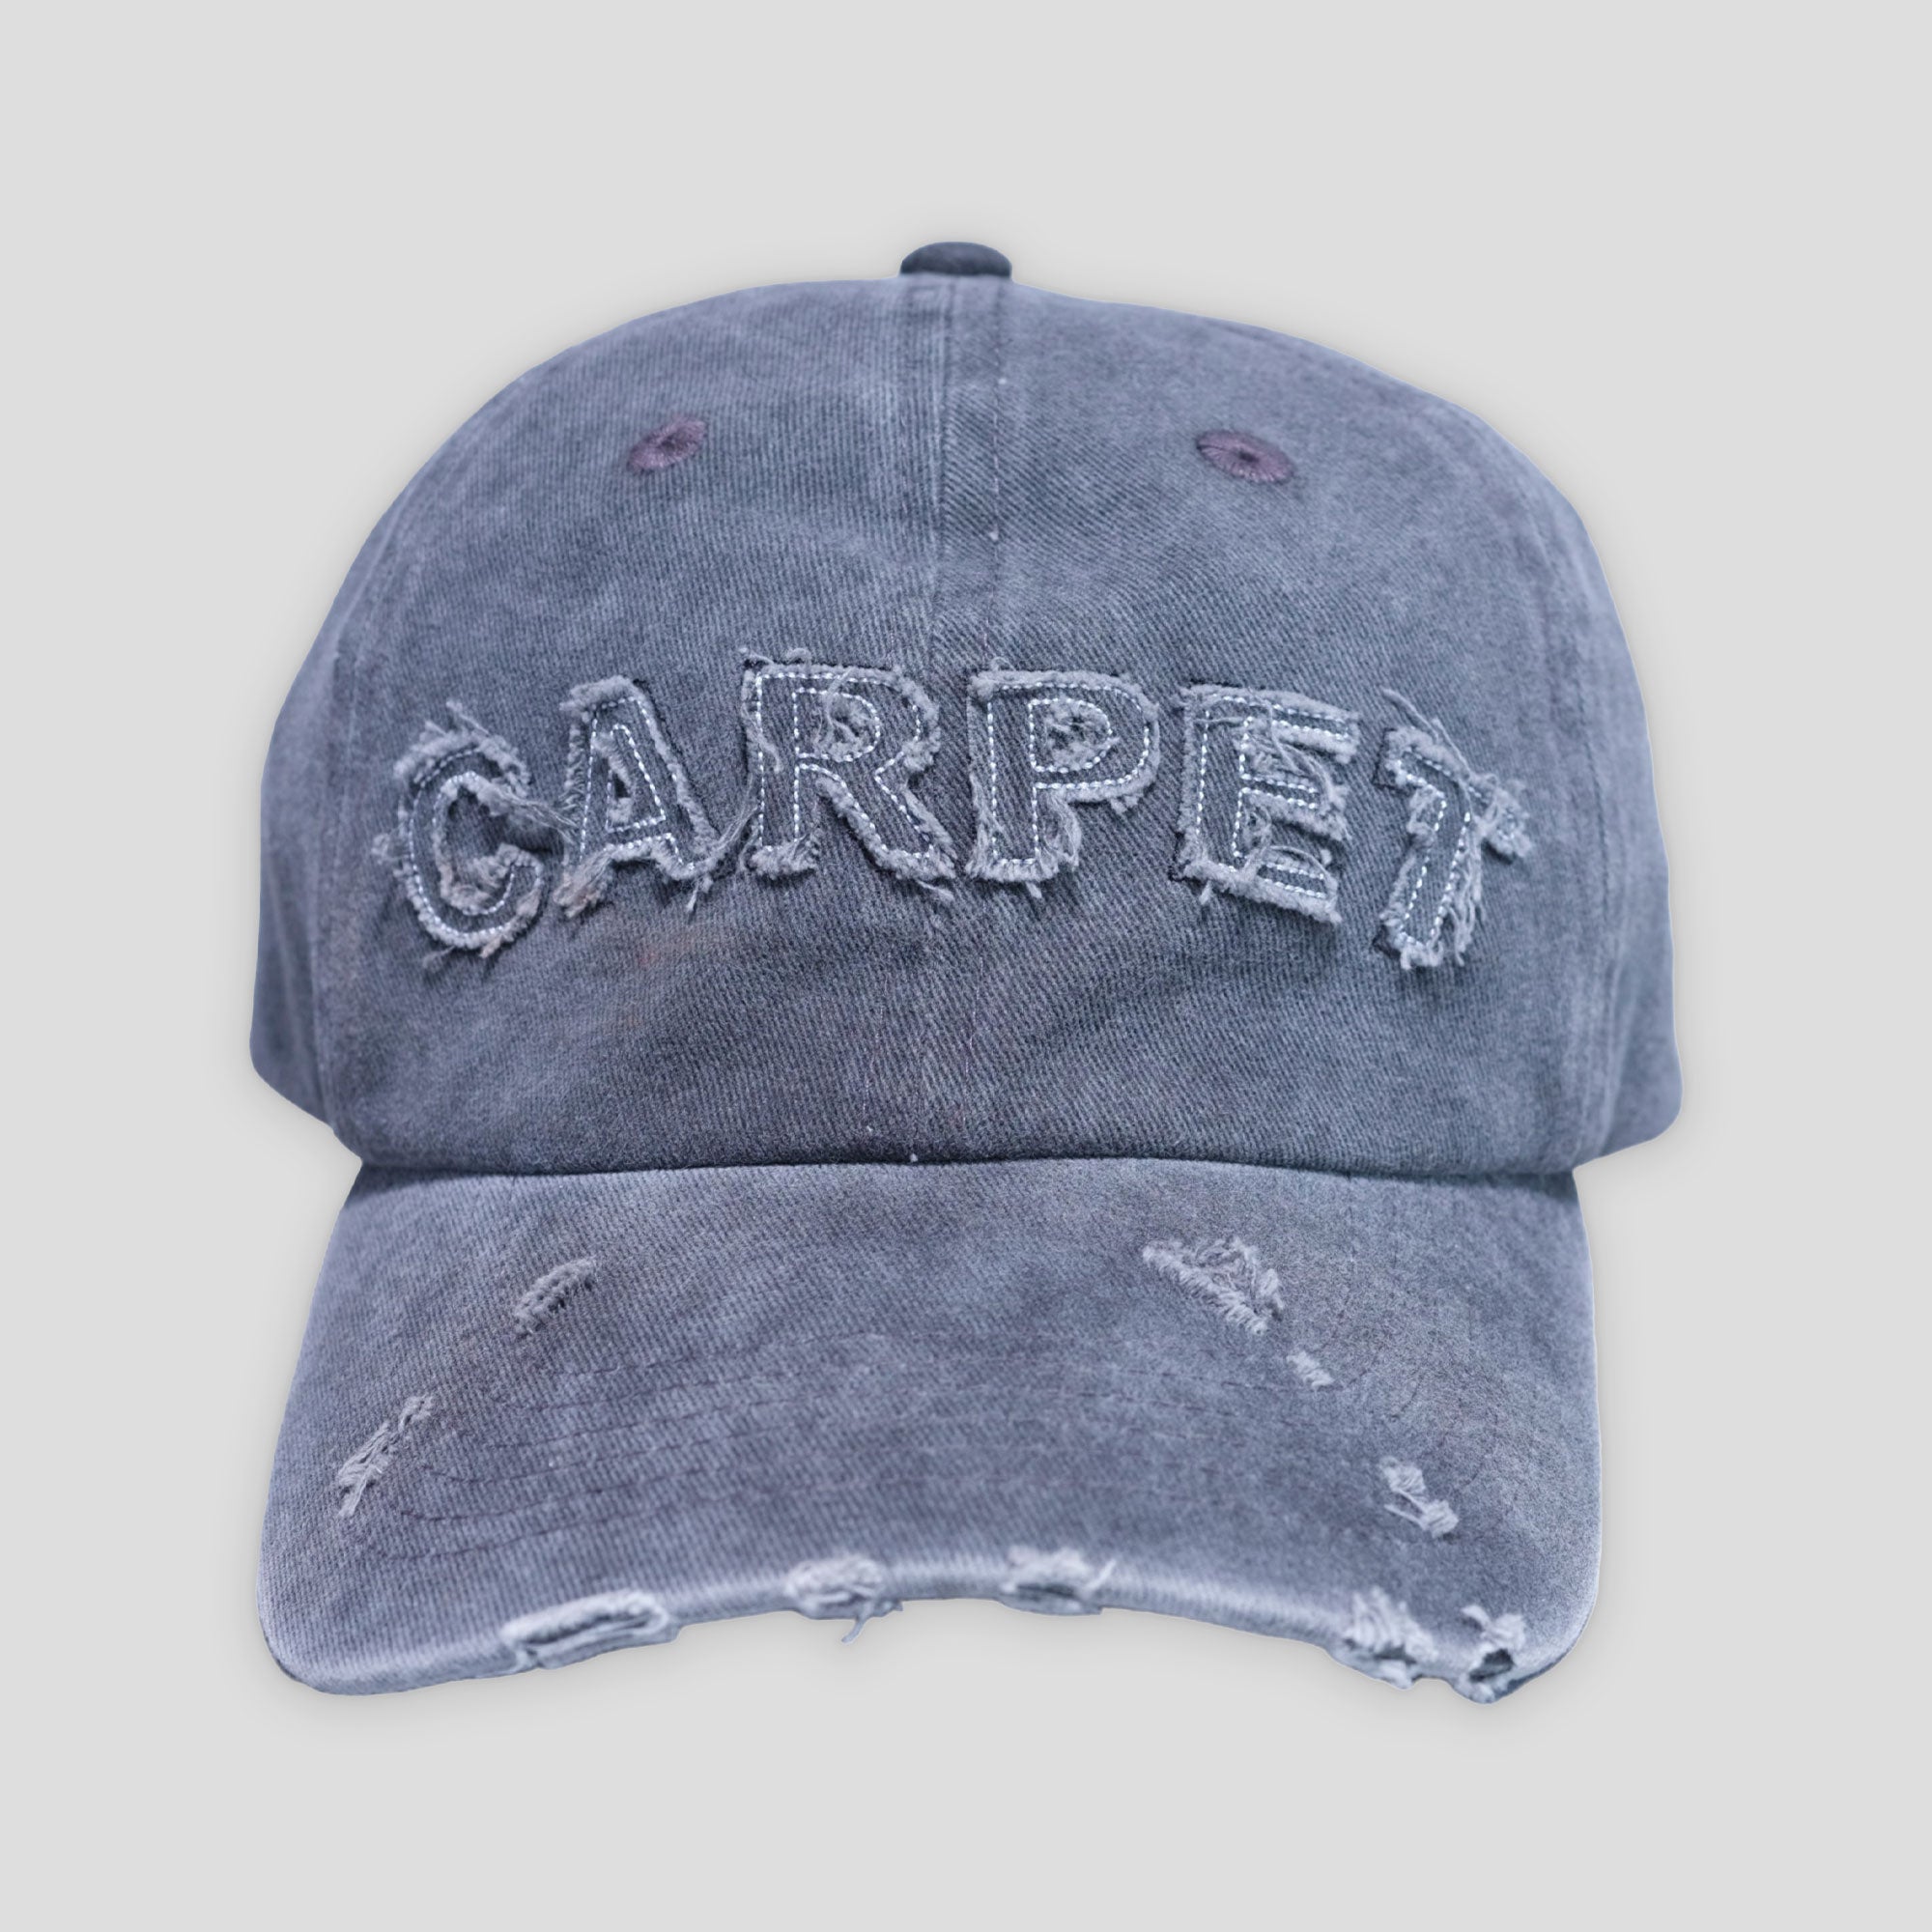 Carpet Company Distressed Cap - Grey